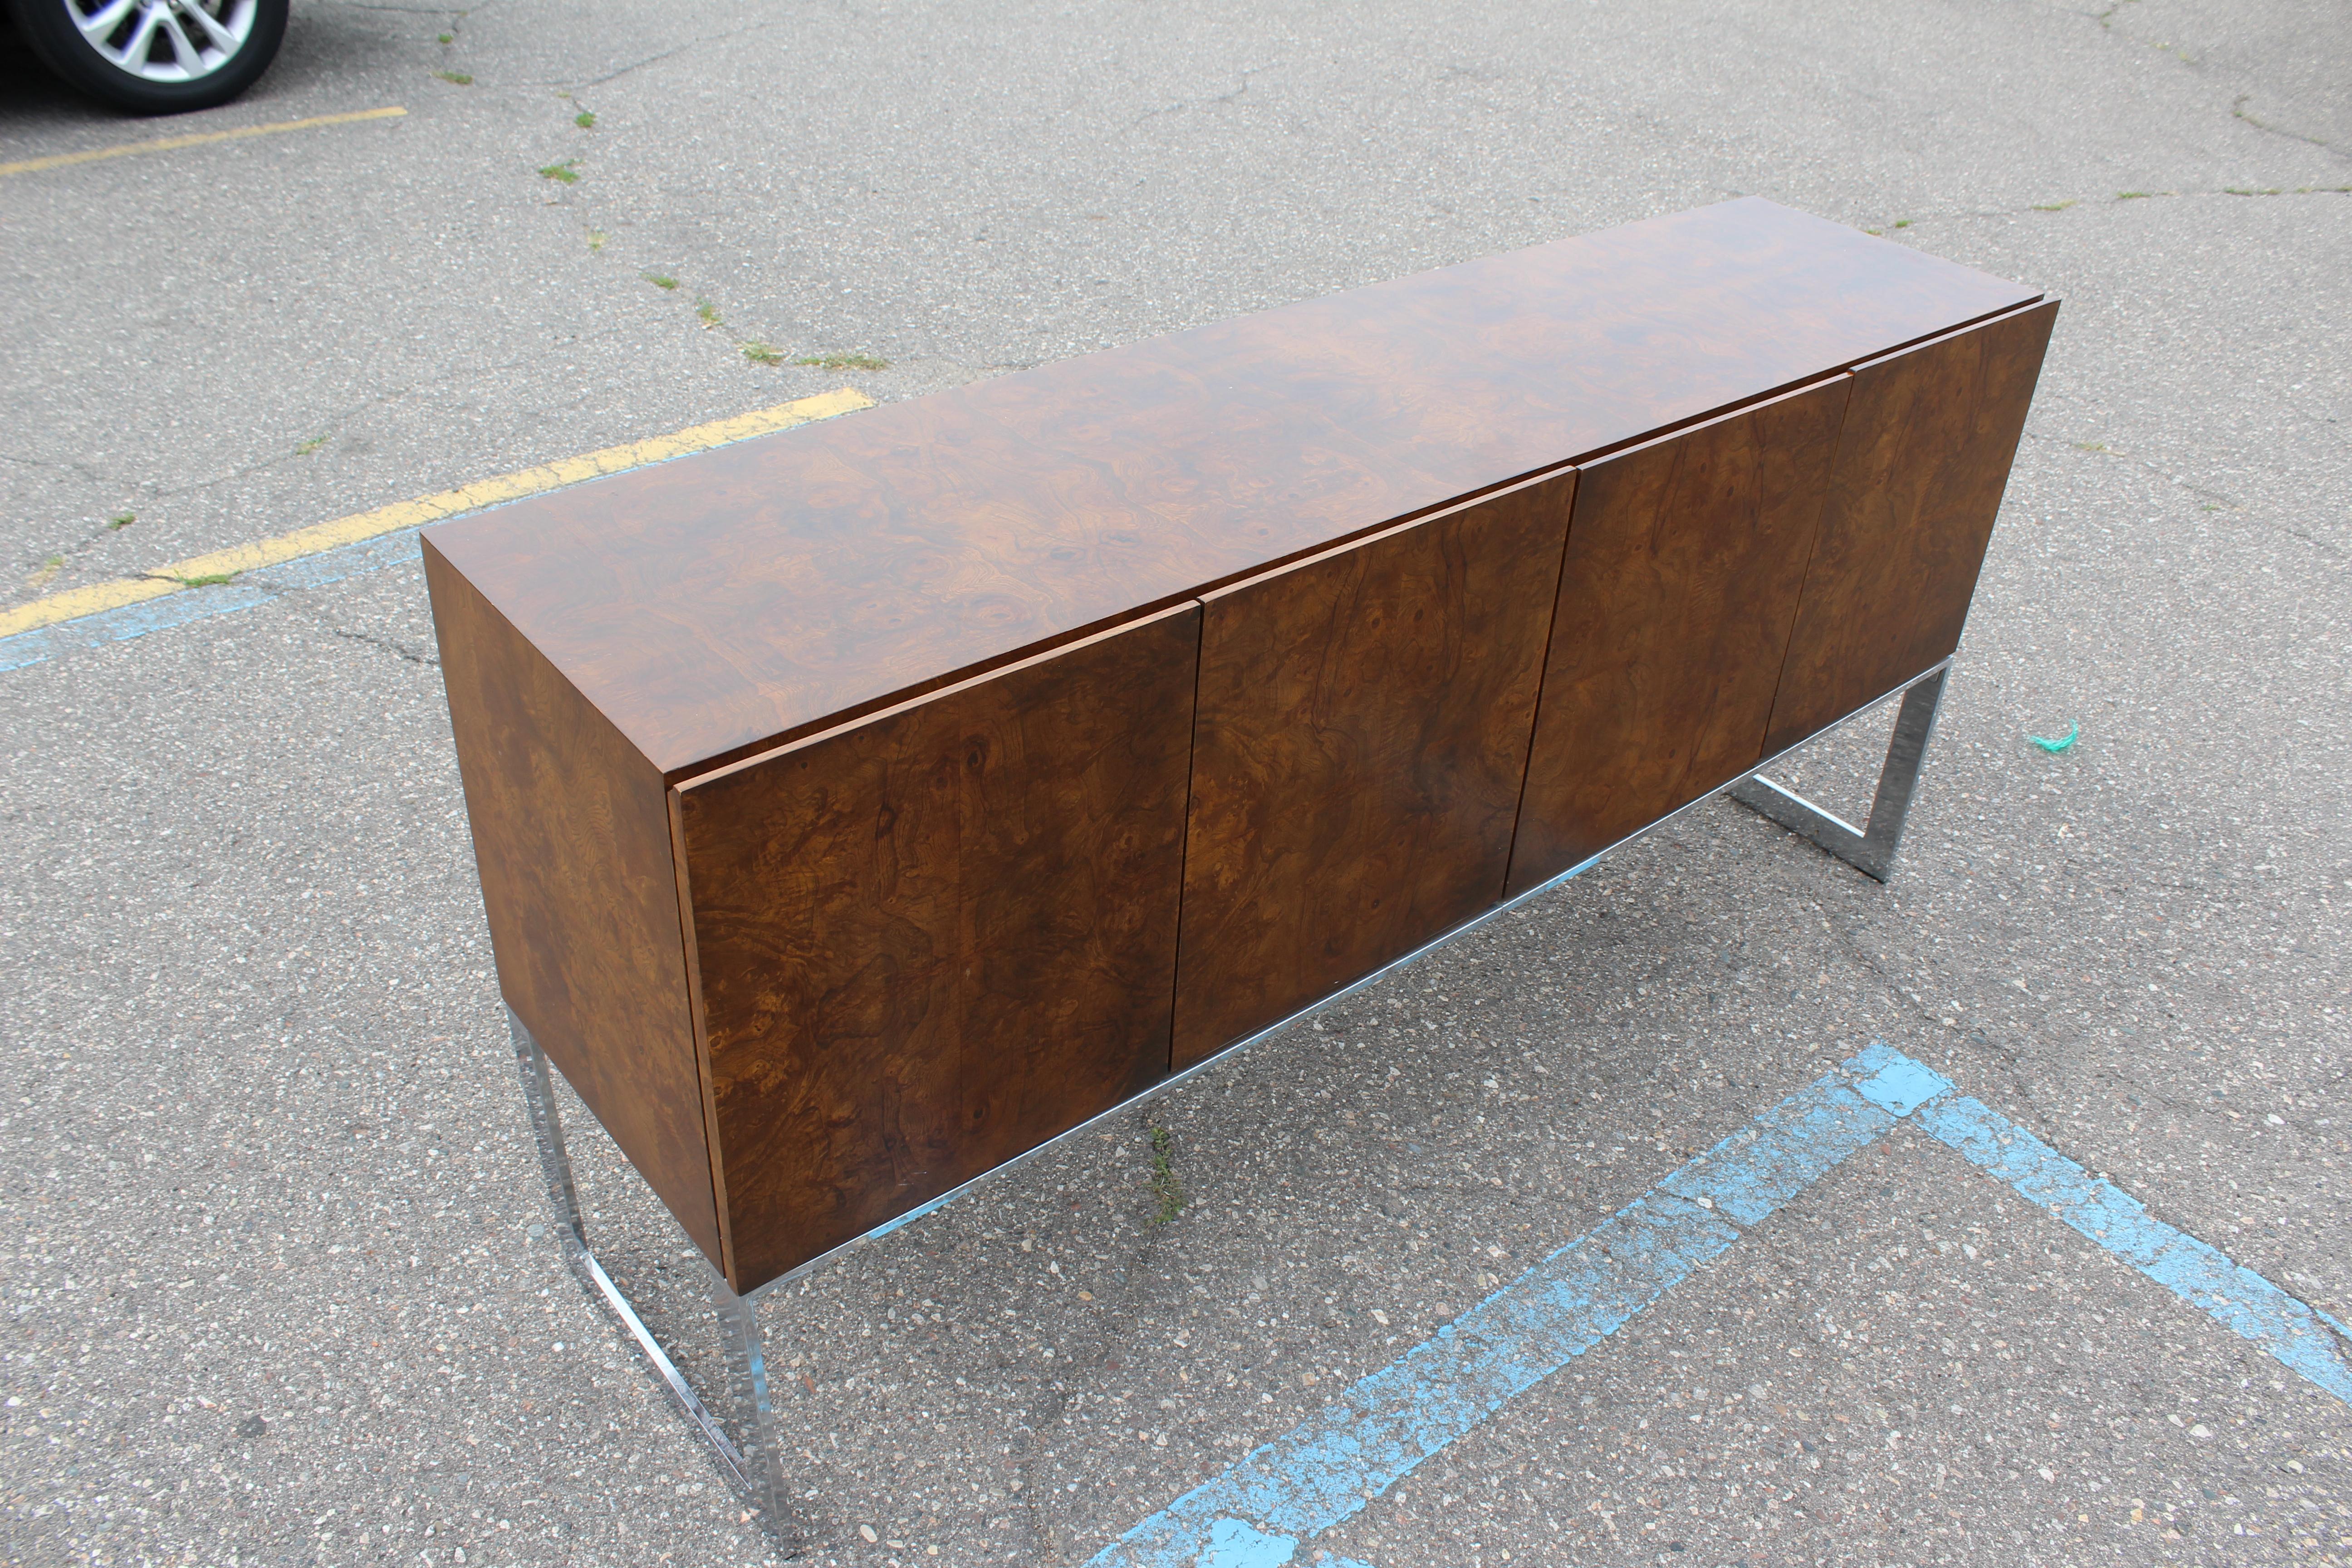 Late 20th Century Mid-Century Modern Burl Wood Sideboard Credenza Baughman for Thayer Coggin 1970s